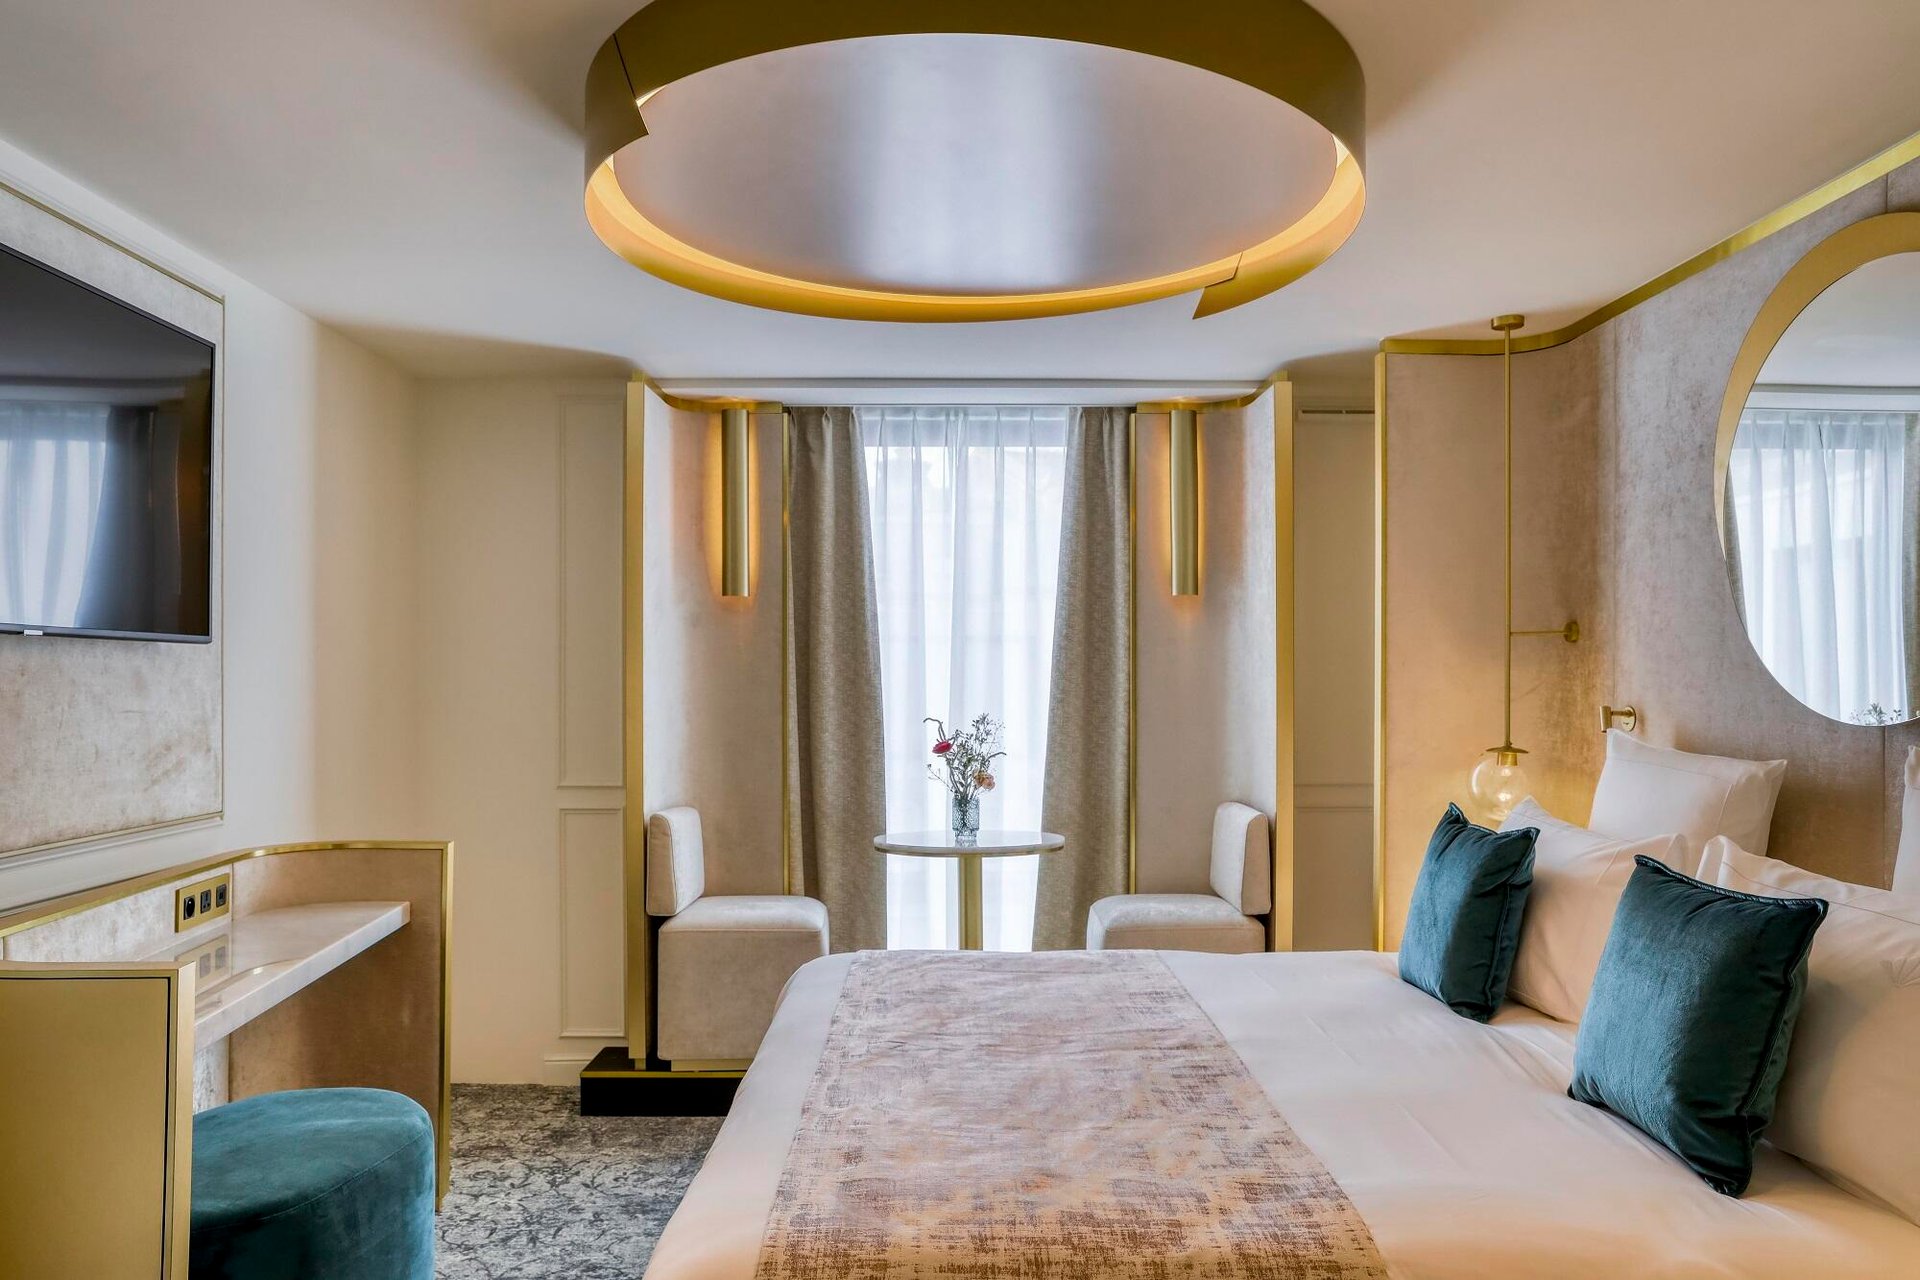 Maison Albar Hotels Le Vendome Room